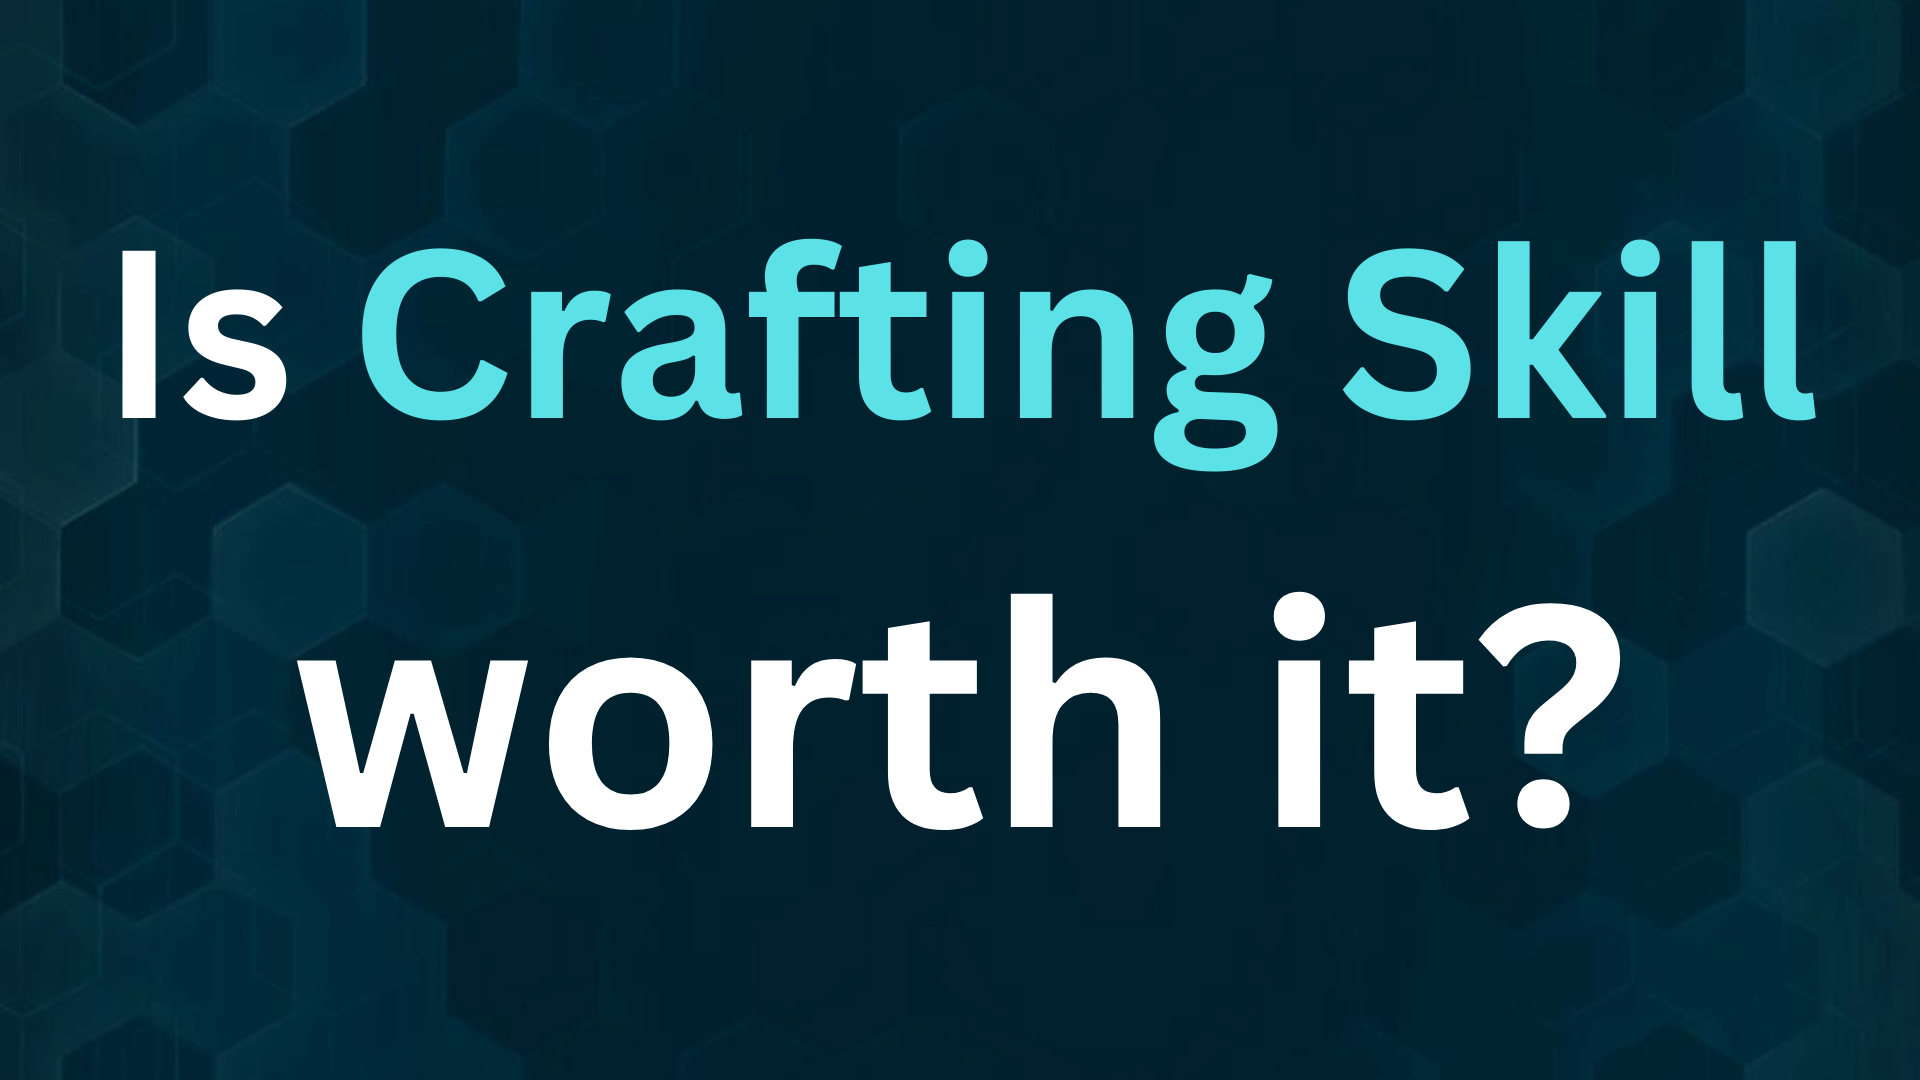 Is Crafting Skill worth it?